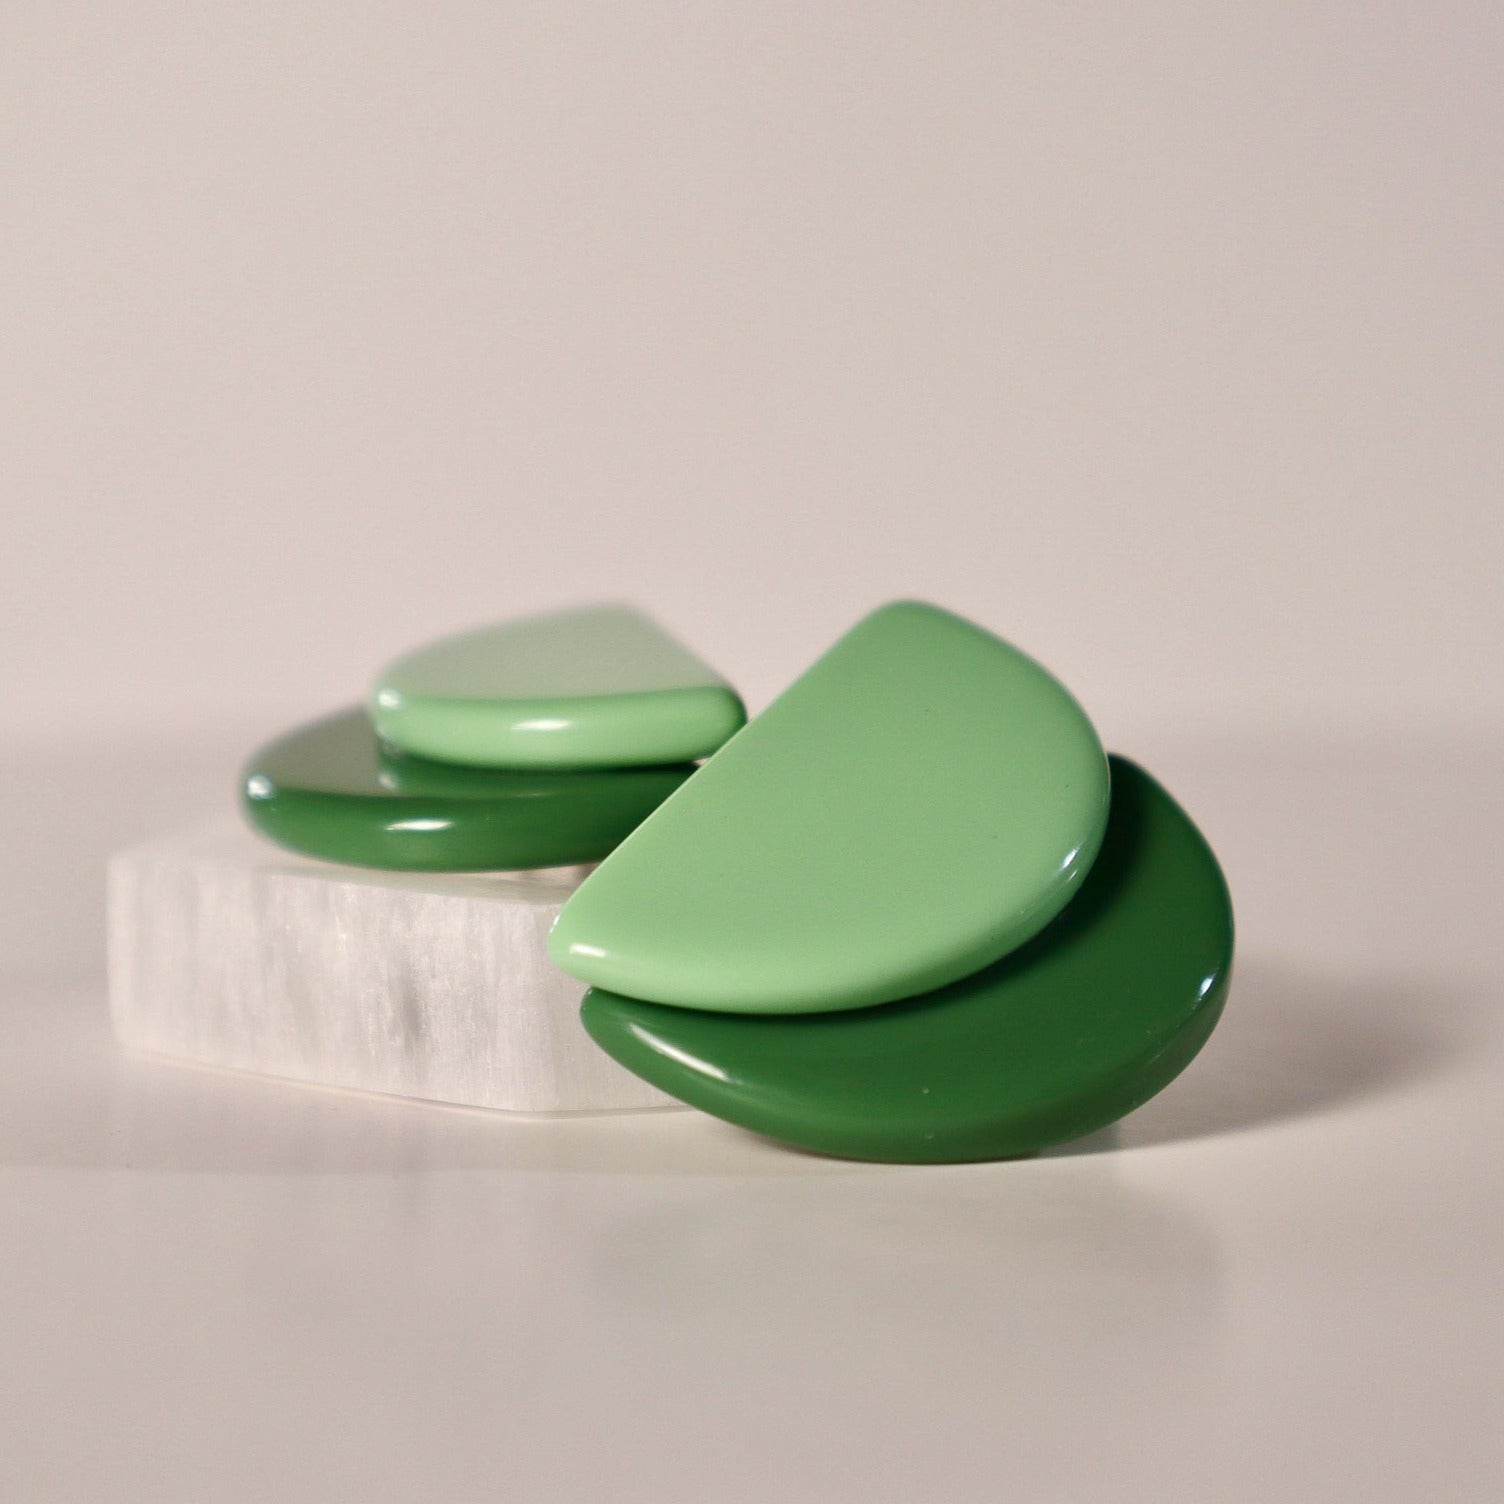 Semi Circles Resin Earrings in Mint Green